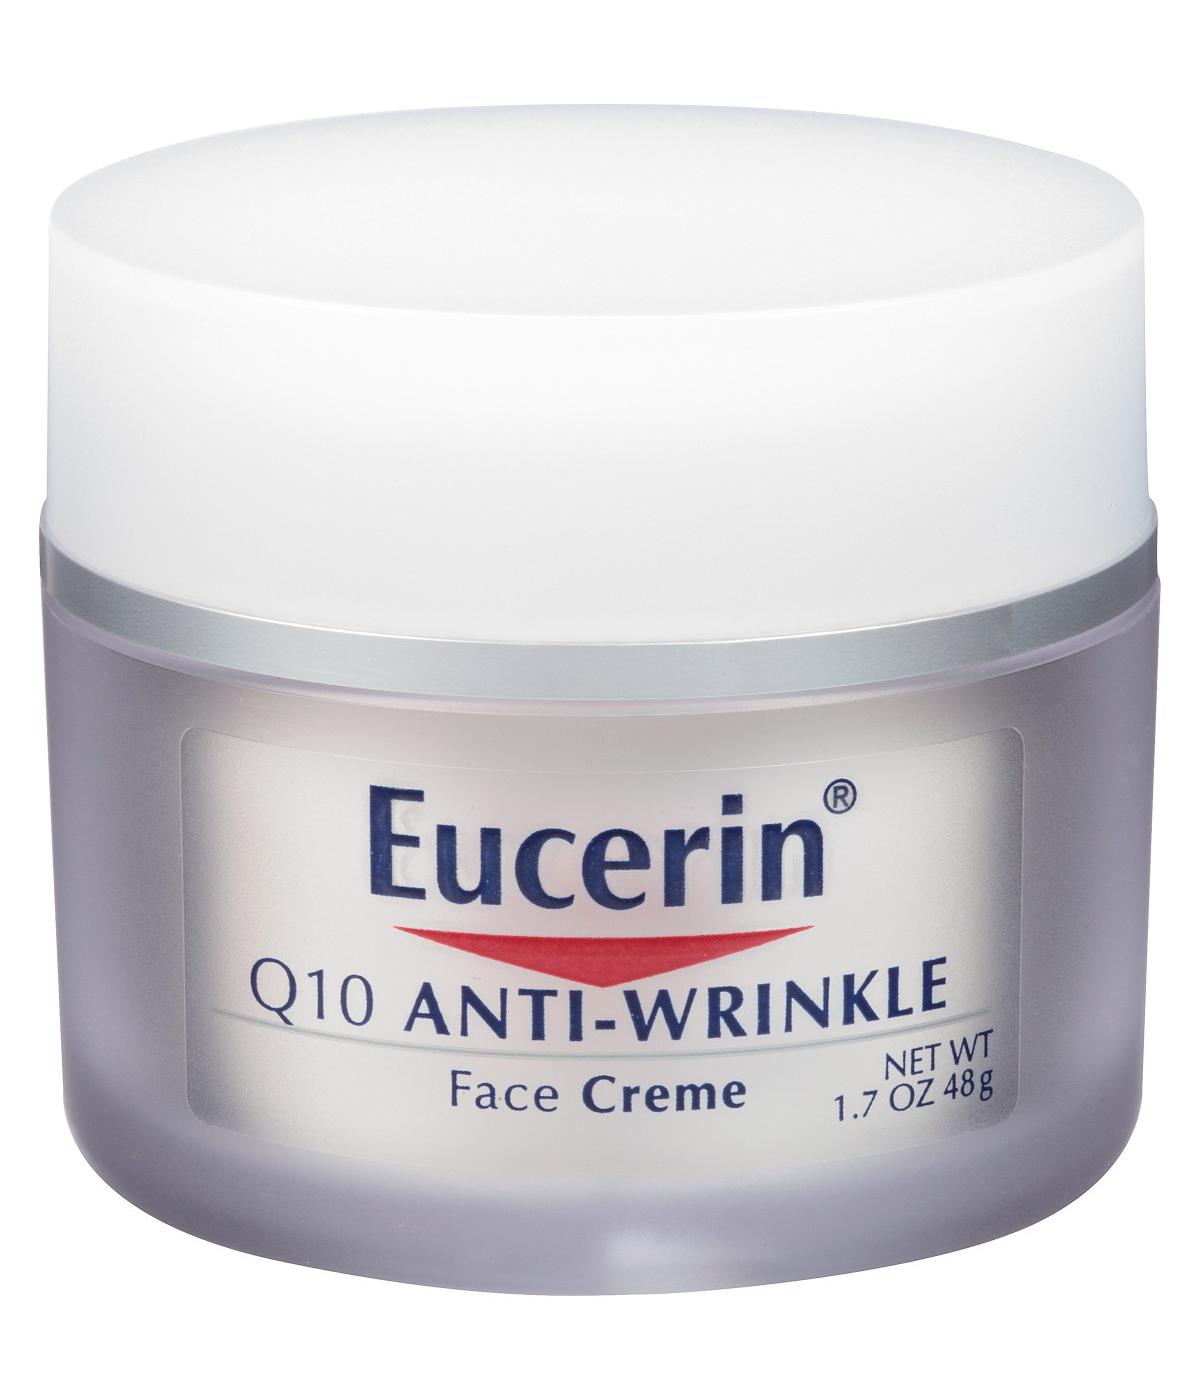 Eucerin Q10 Anti-Wrinkle Sensitive Skin Face Creme; image 4 of 5